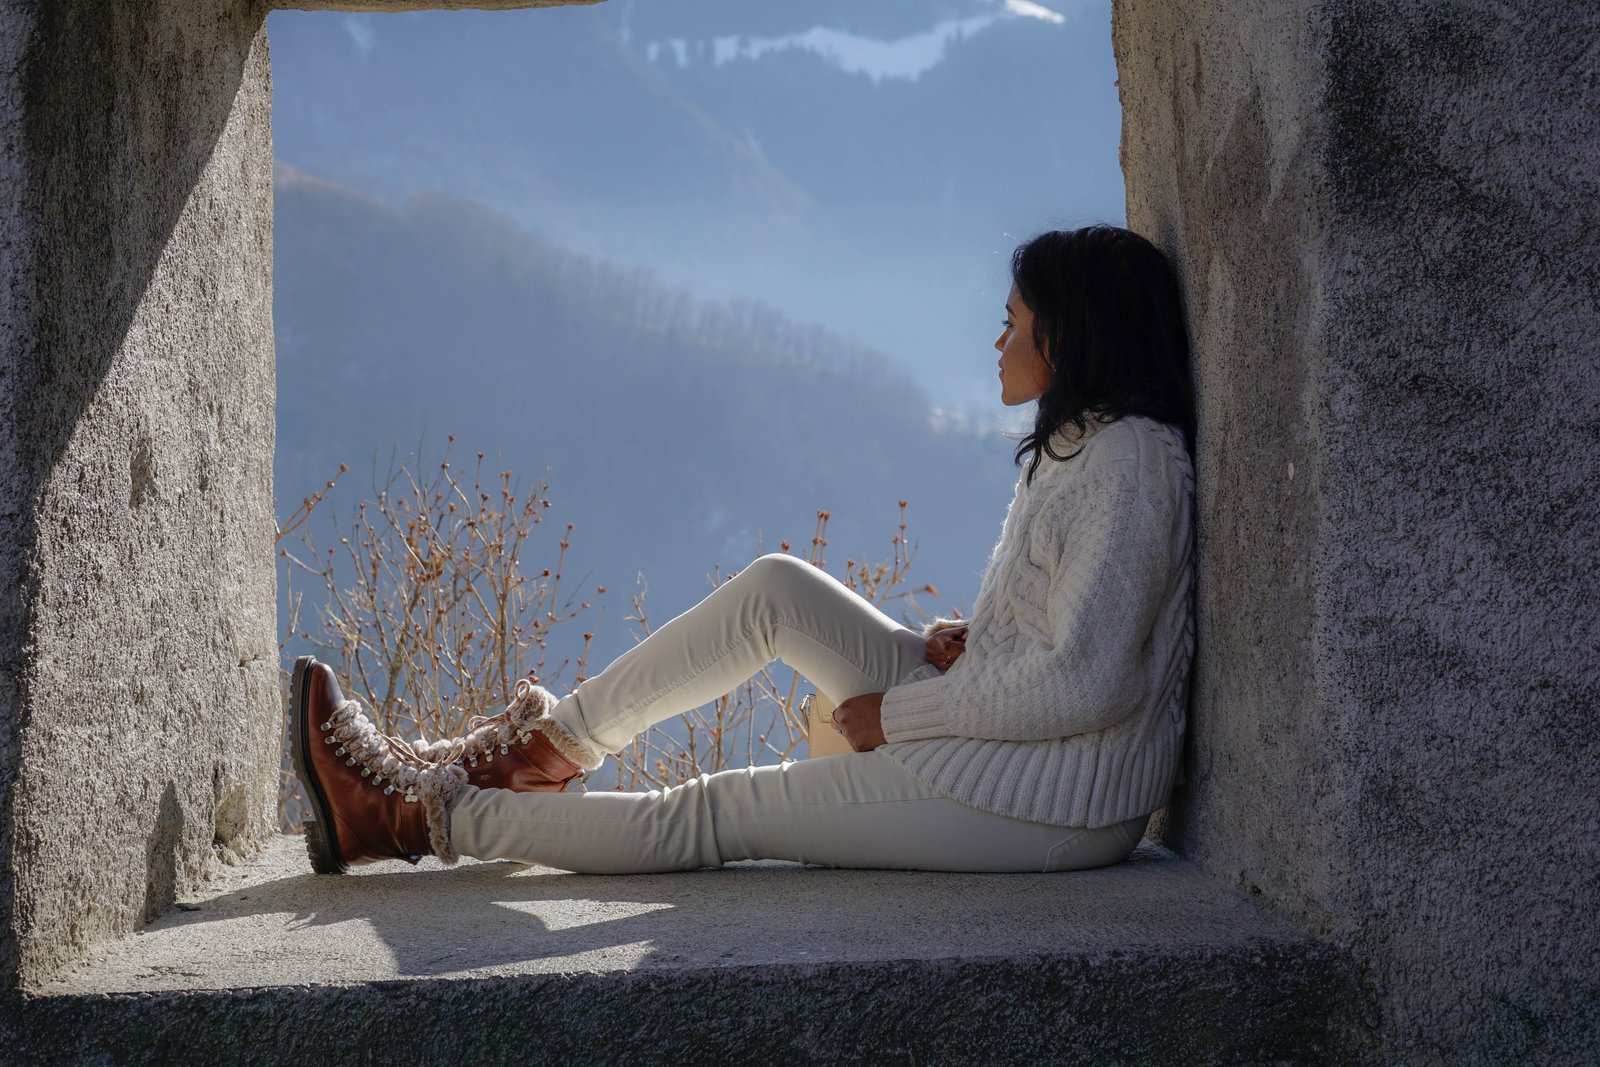 Sachini sitting in a stone window wearing white